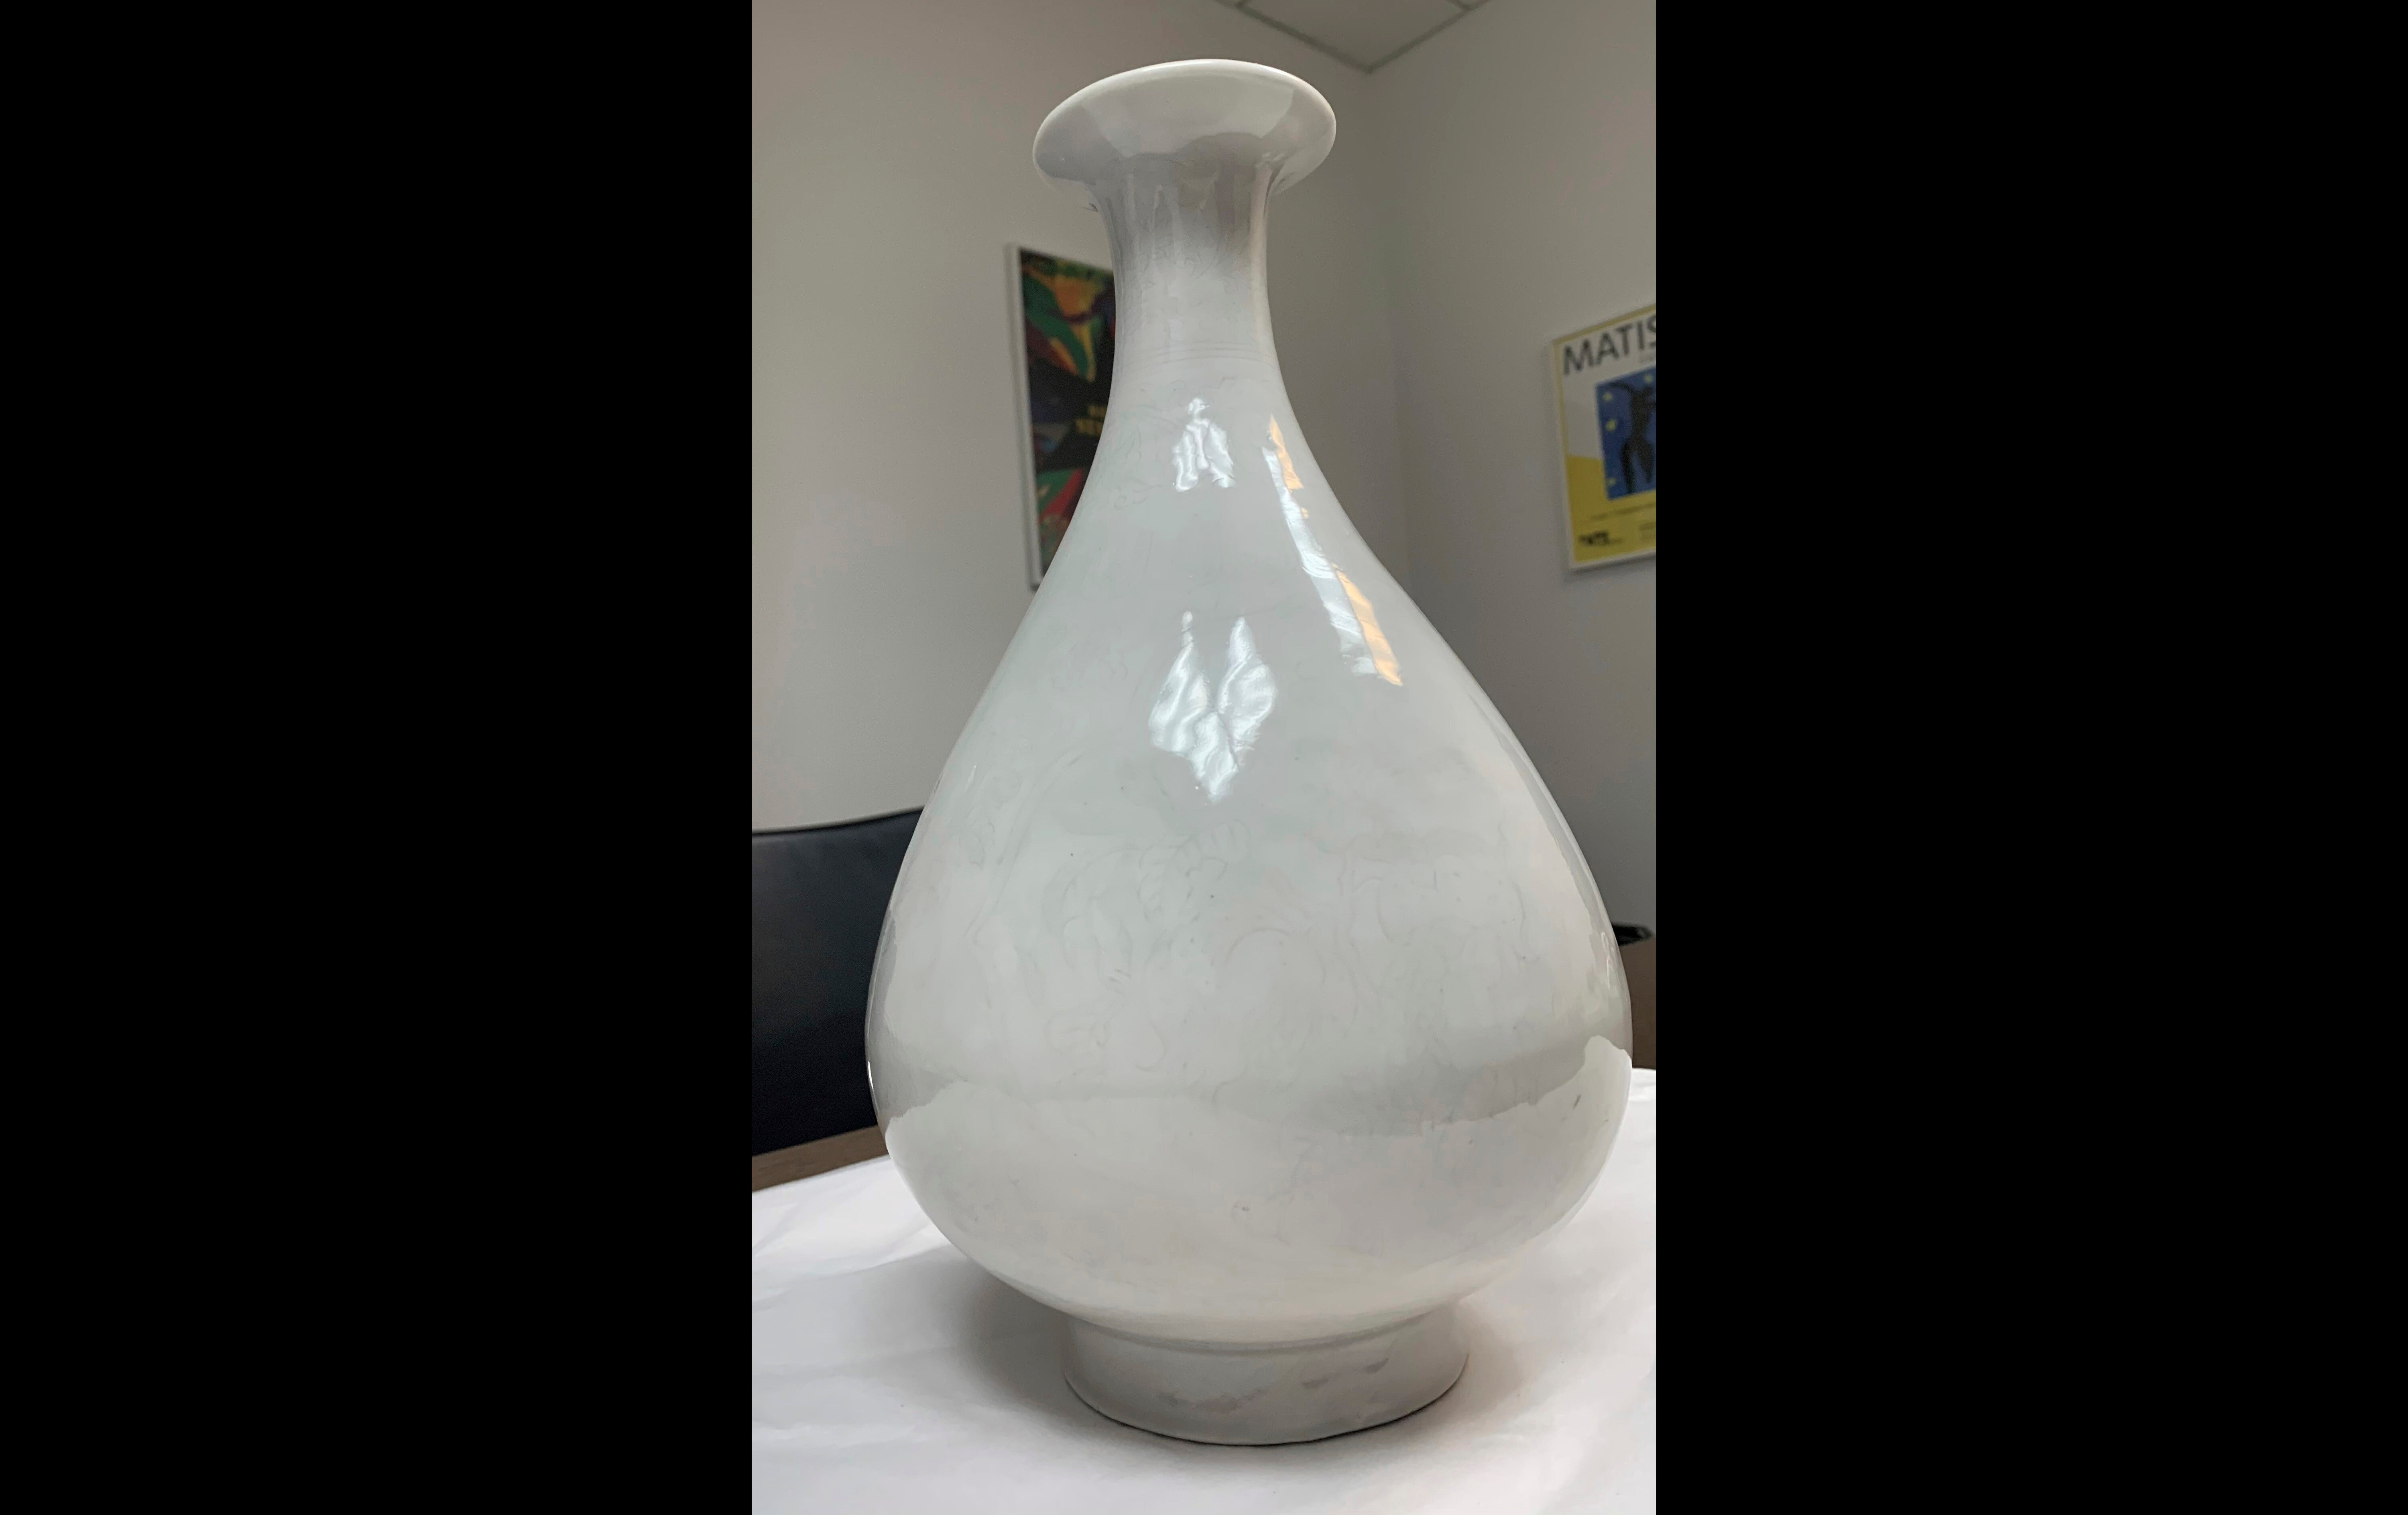 Britain Ming Vase Heist